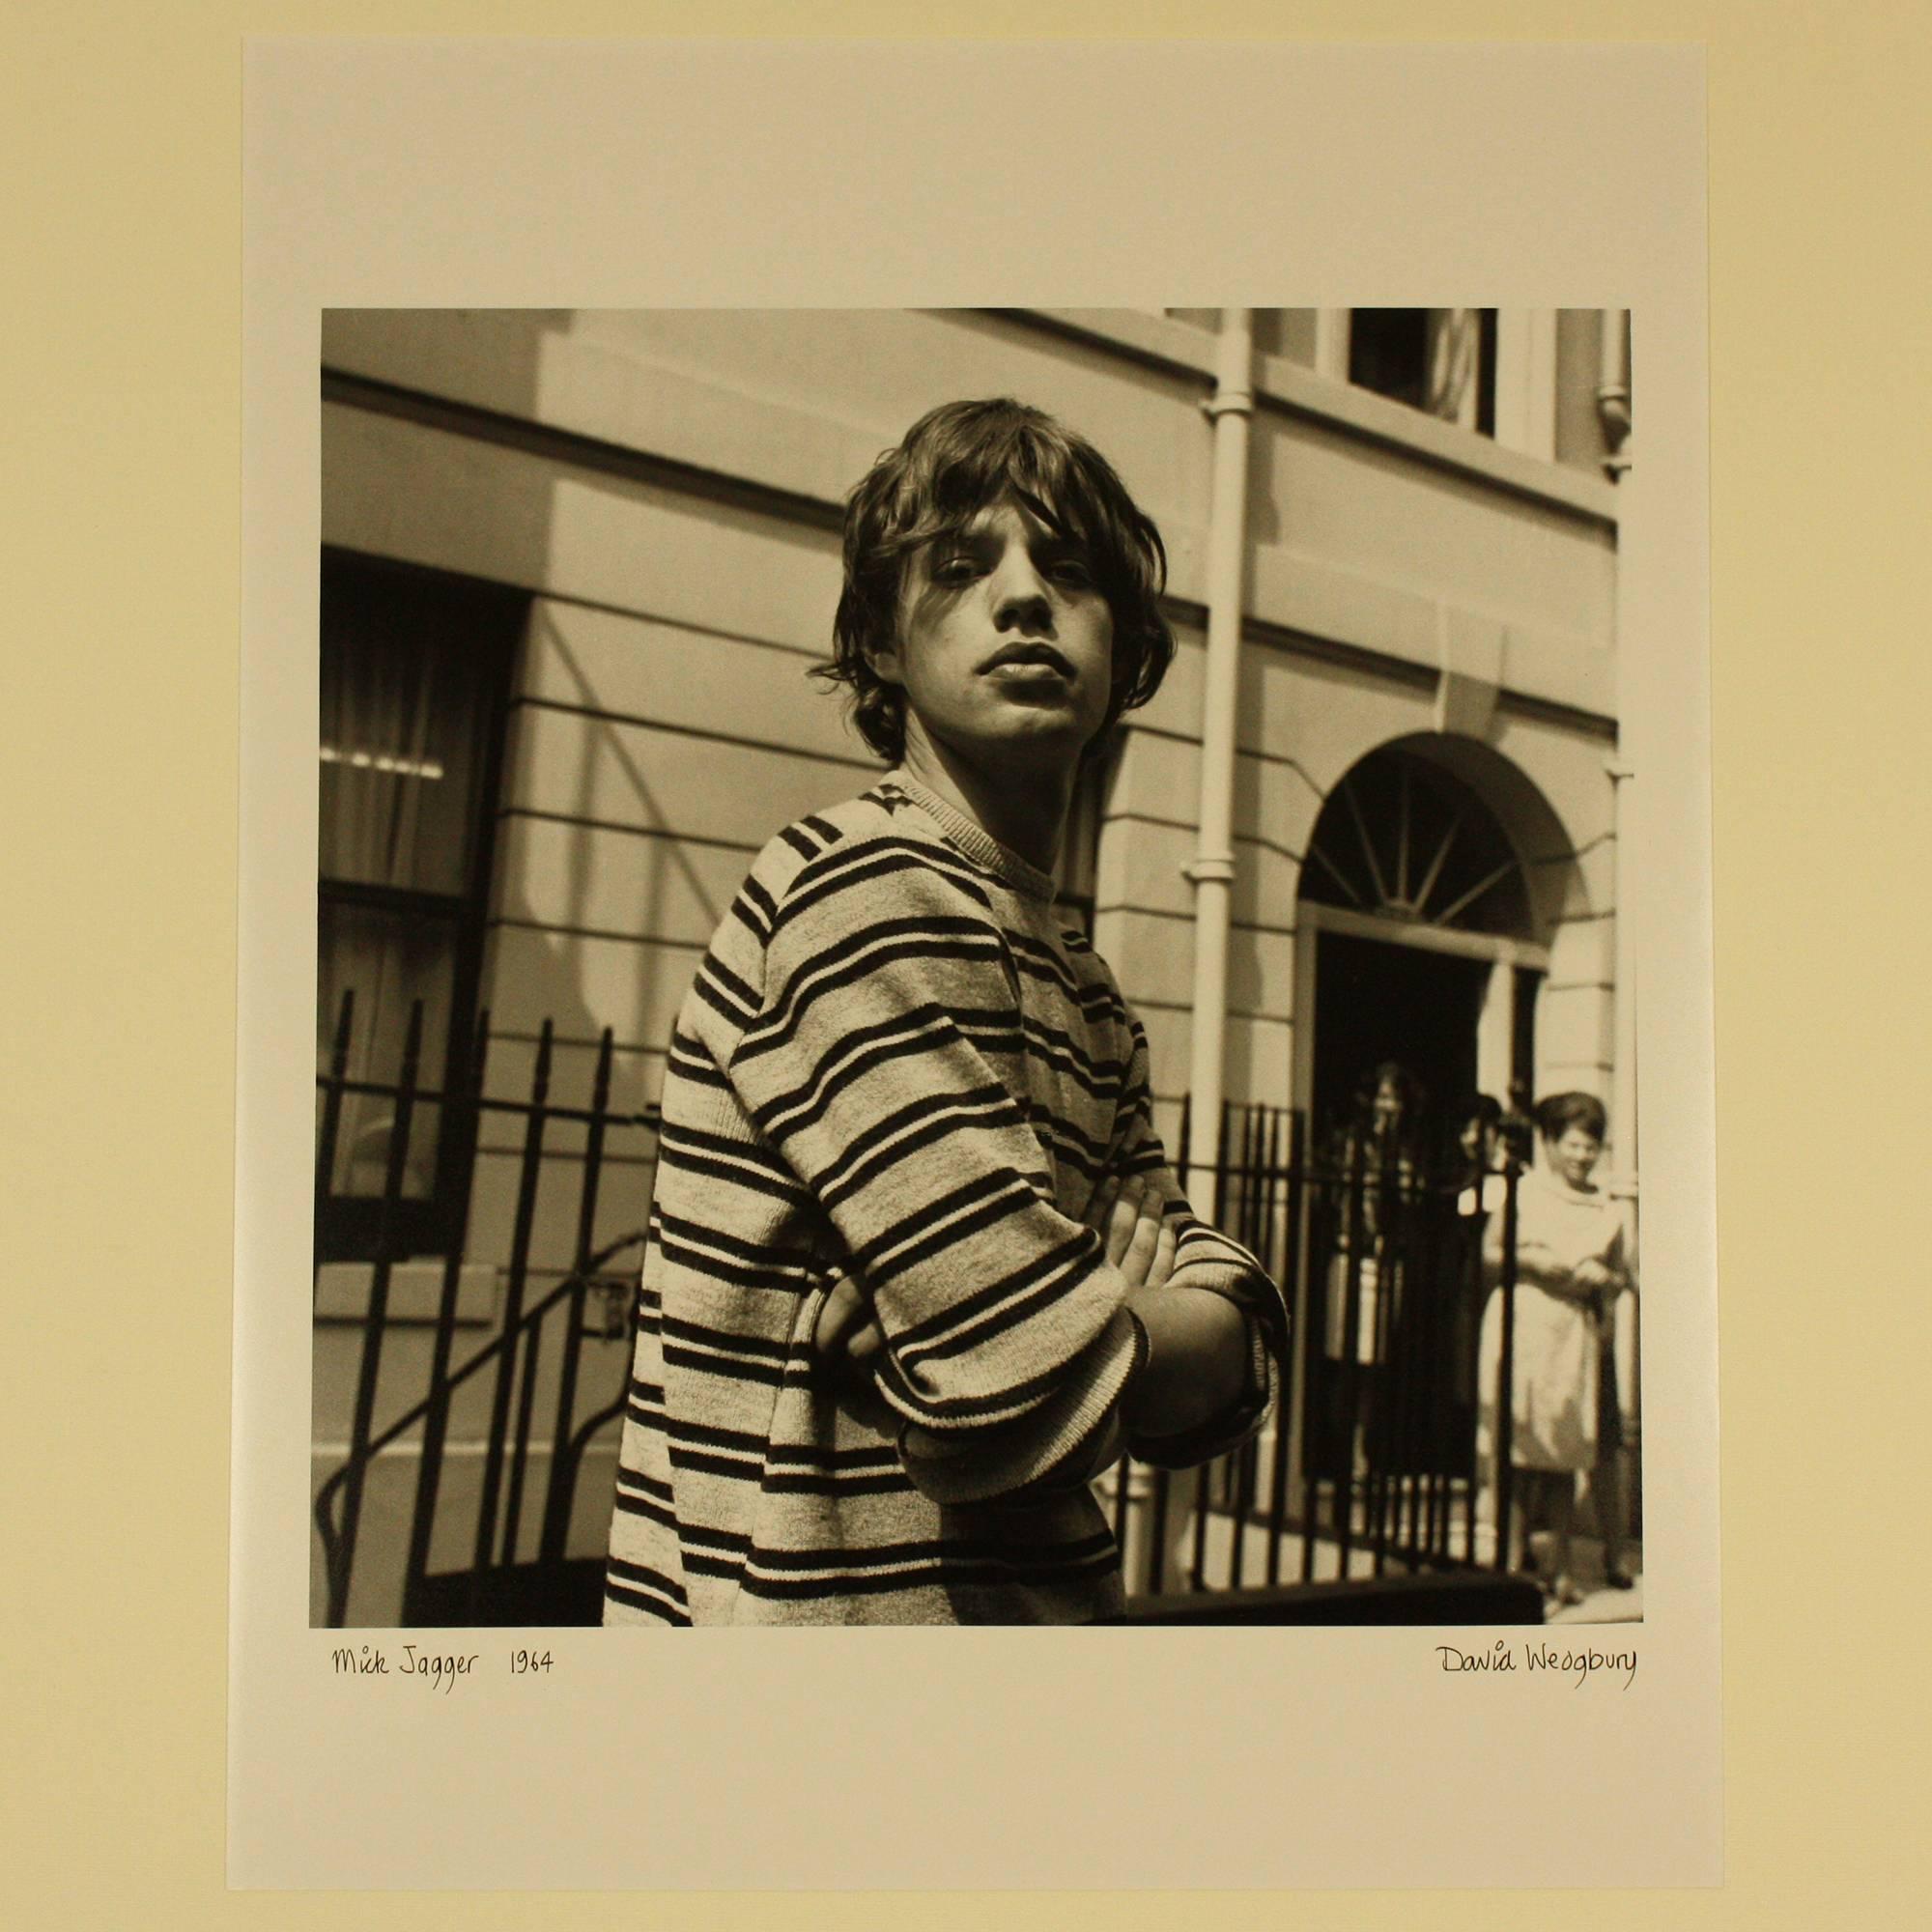 MICK JAGGER by David Wedgebury 1964 - Photograph by David Wedgbury